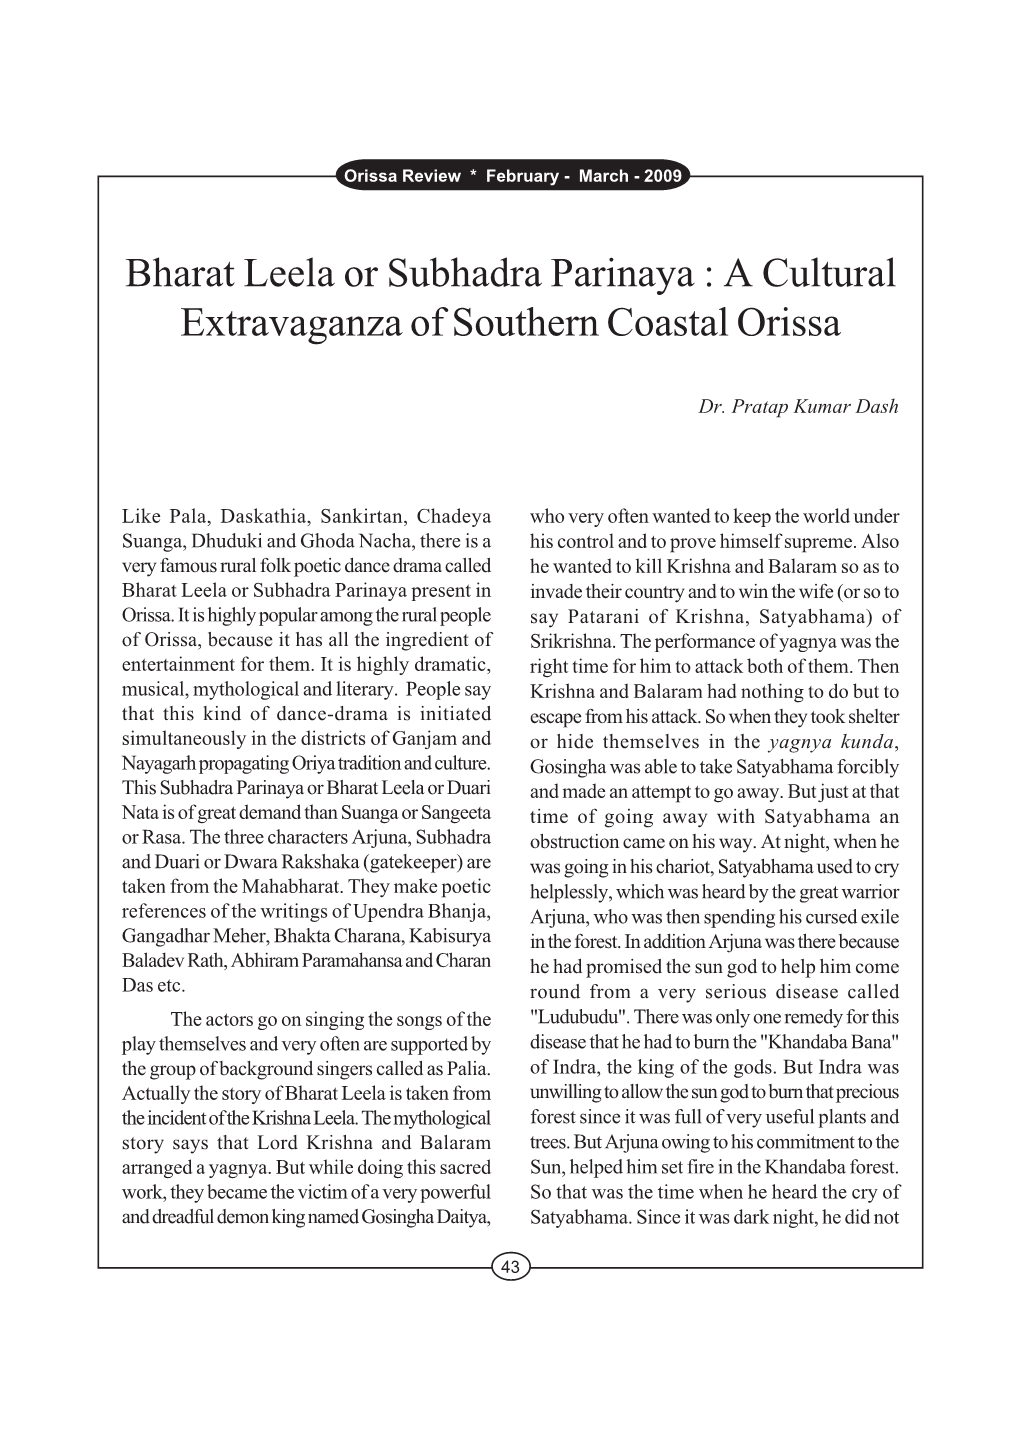 Bharat Leela Or Subhadra Parinaya : a Cultural Extravaganza of Southern Coastal Orissa